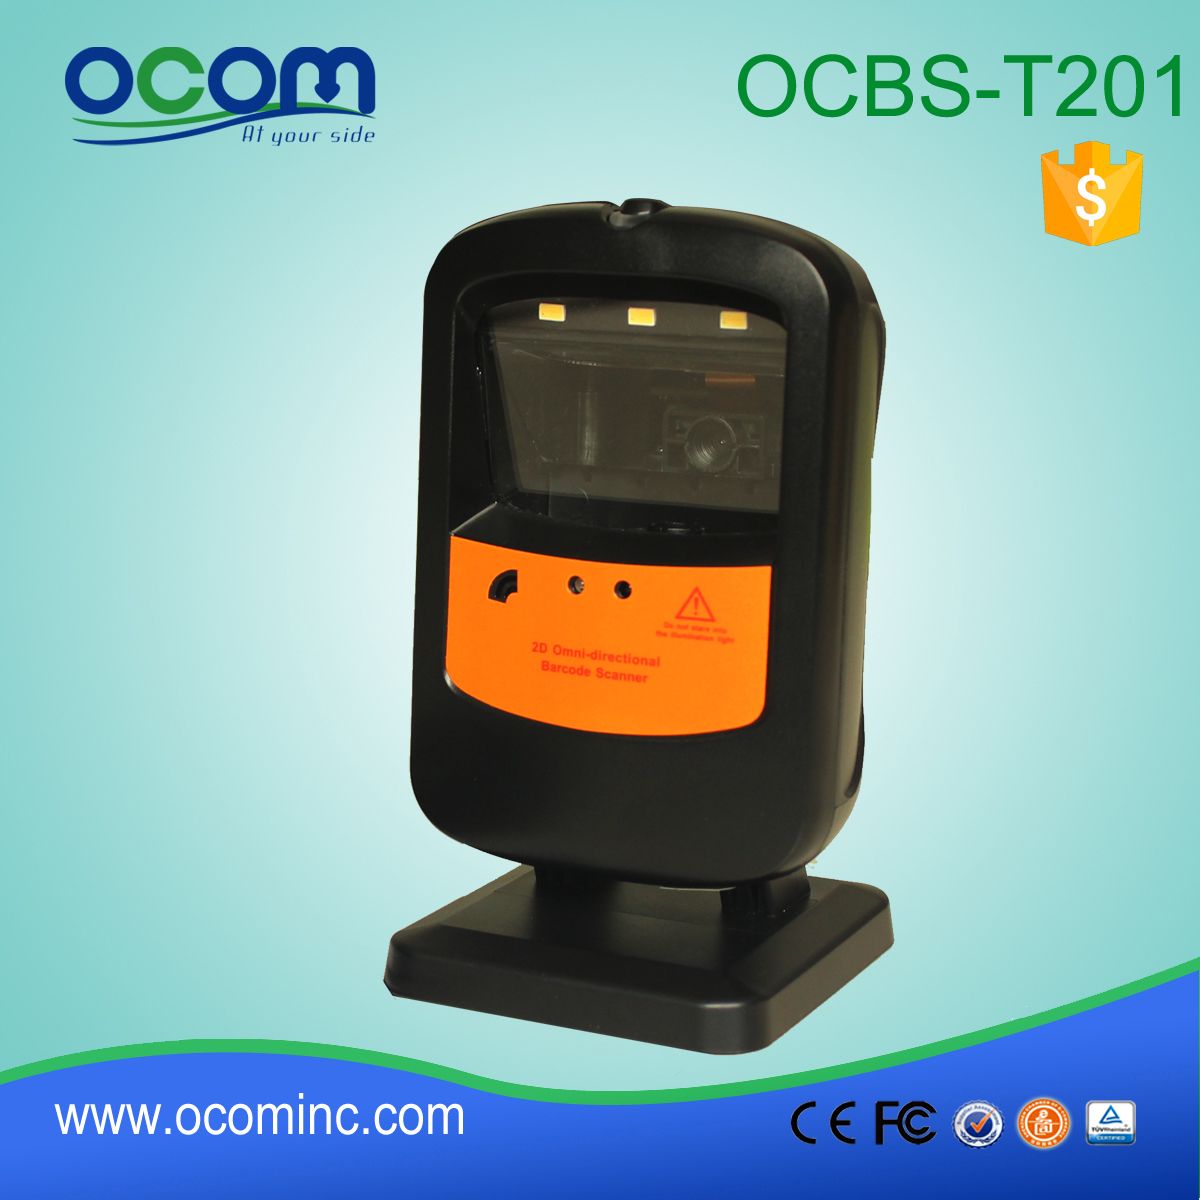 OCBs-T201: barcode scanner προμηθευτή Φιλιππίνες, μονάδα σάρωσης 2D Barcode